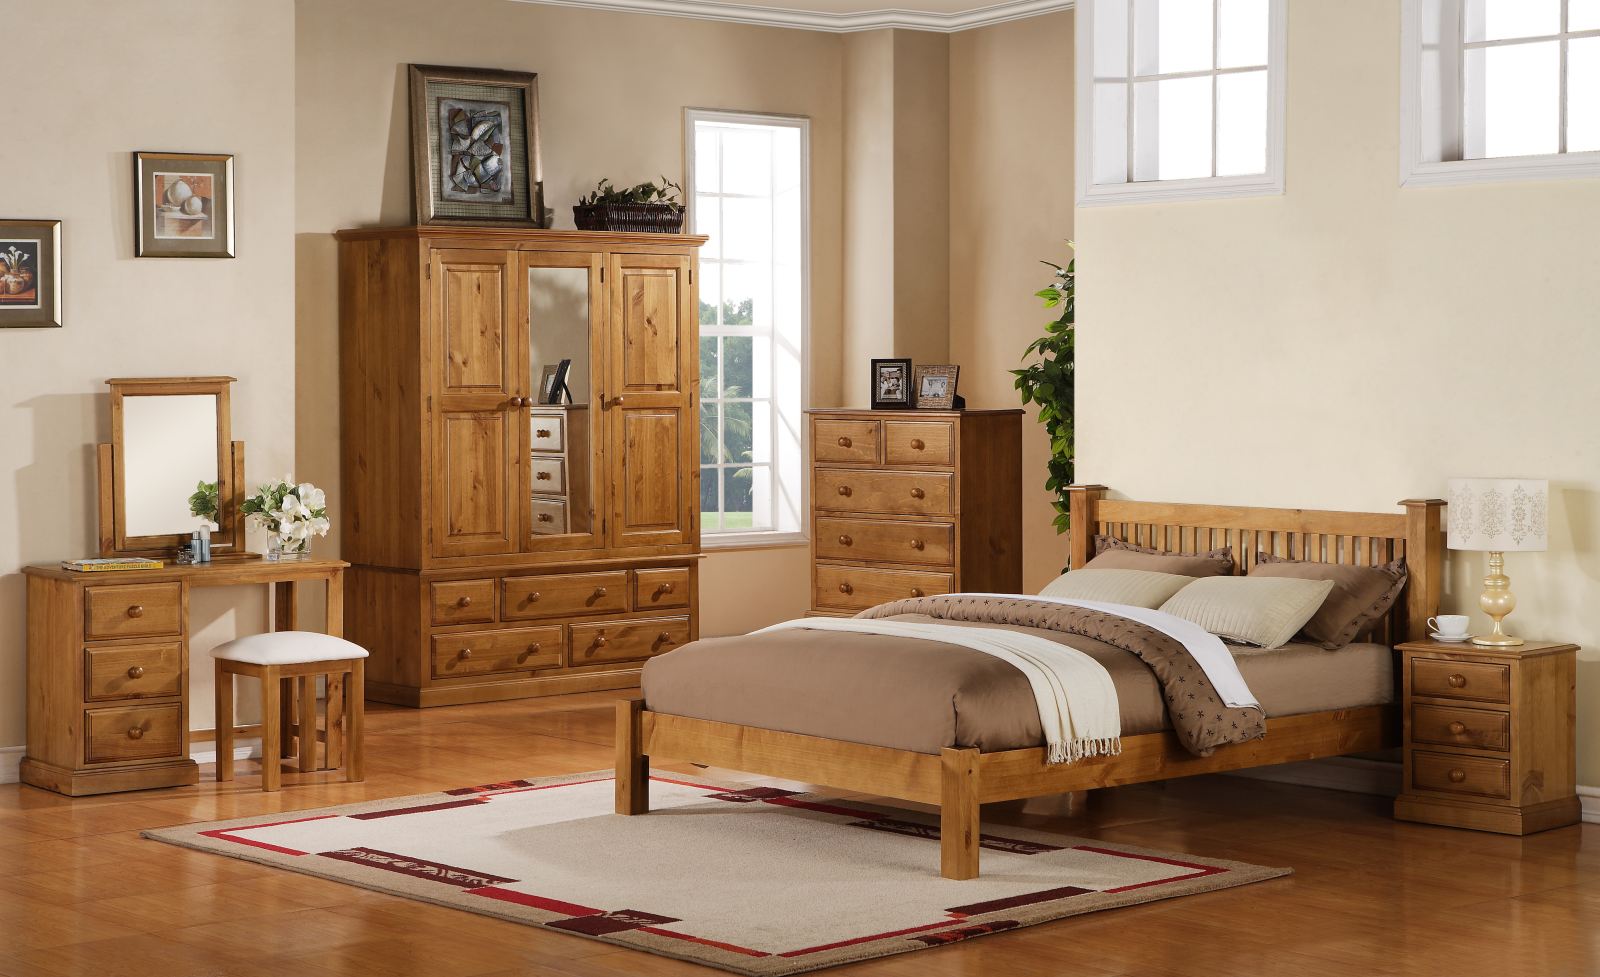 wholesale pine bedroom furniture